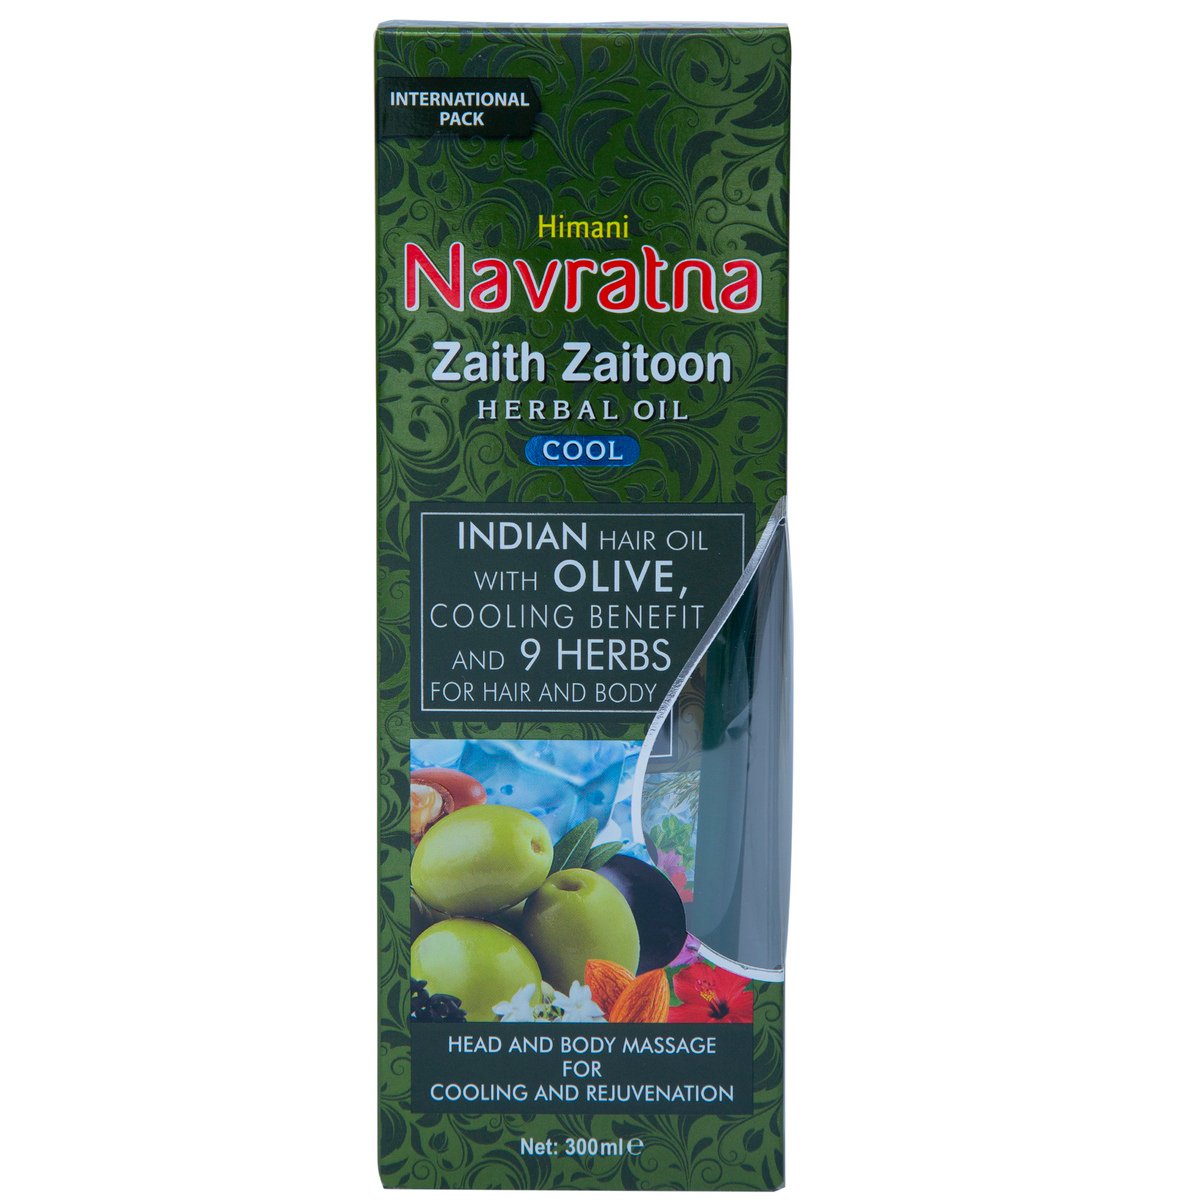 Himani Navratna Zaith Zaitoon Cool Herbal Oil 300 ml